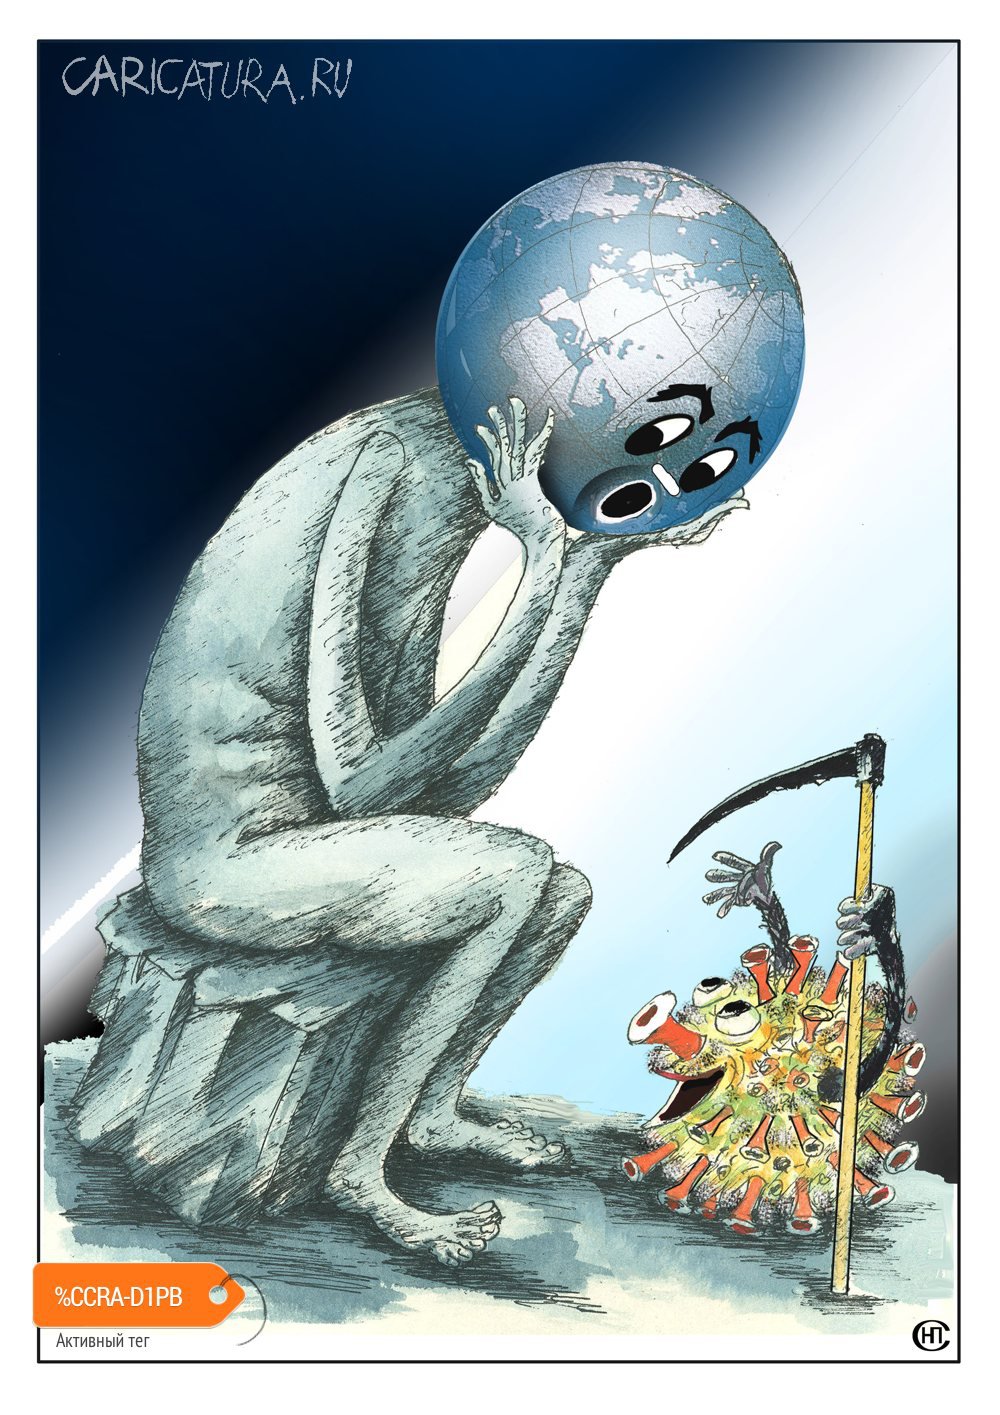 Карикатура "Не ждали", Николай Свириденко